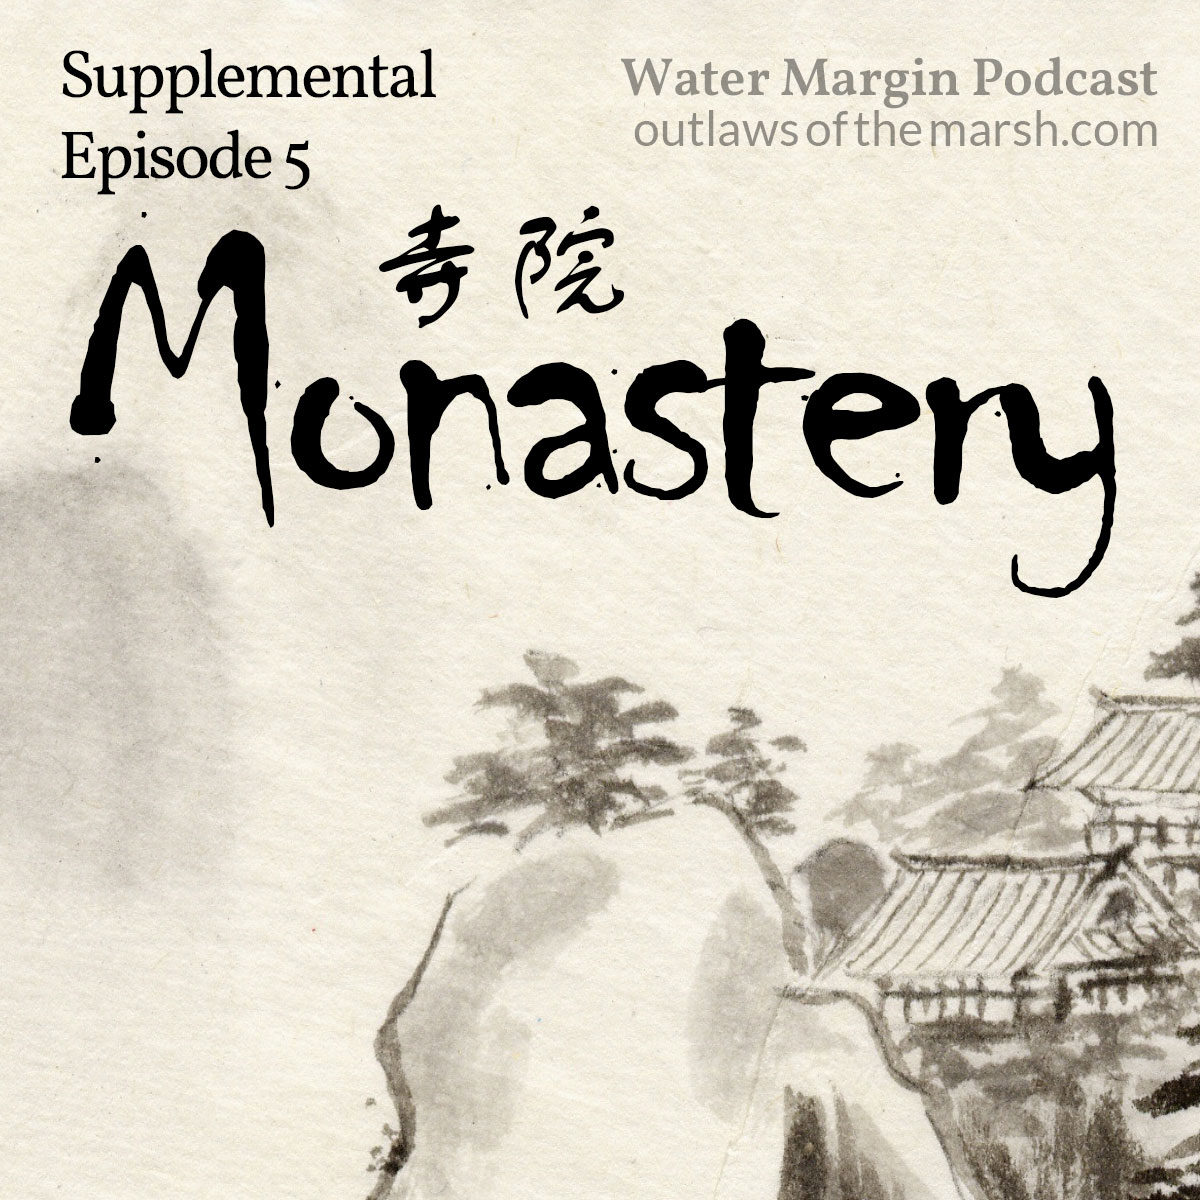 Water Margin Podcast: Supplemental Episode 005